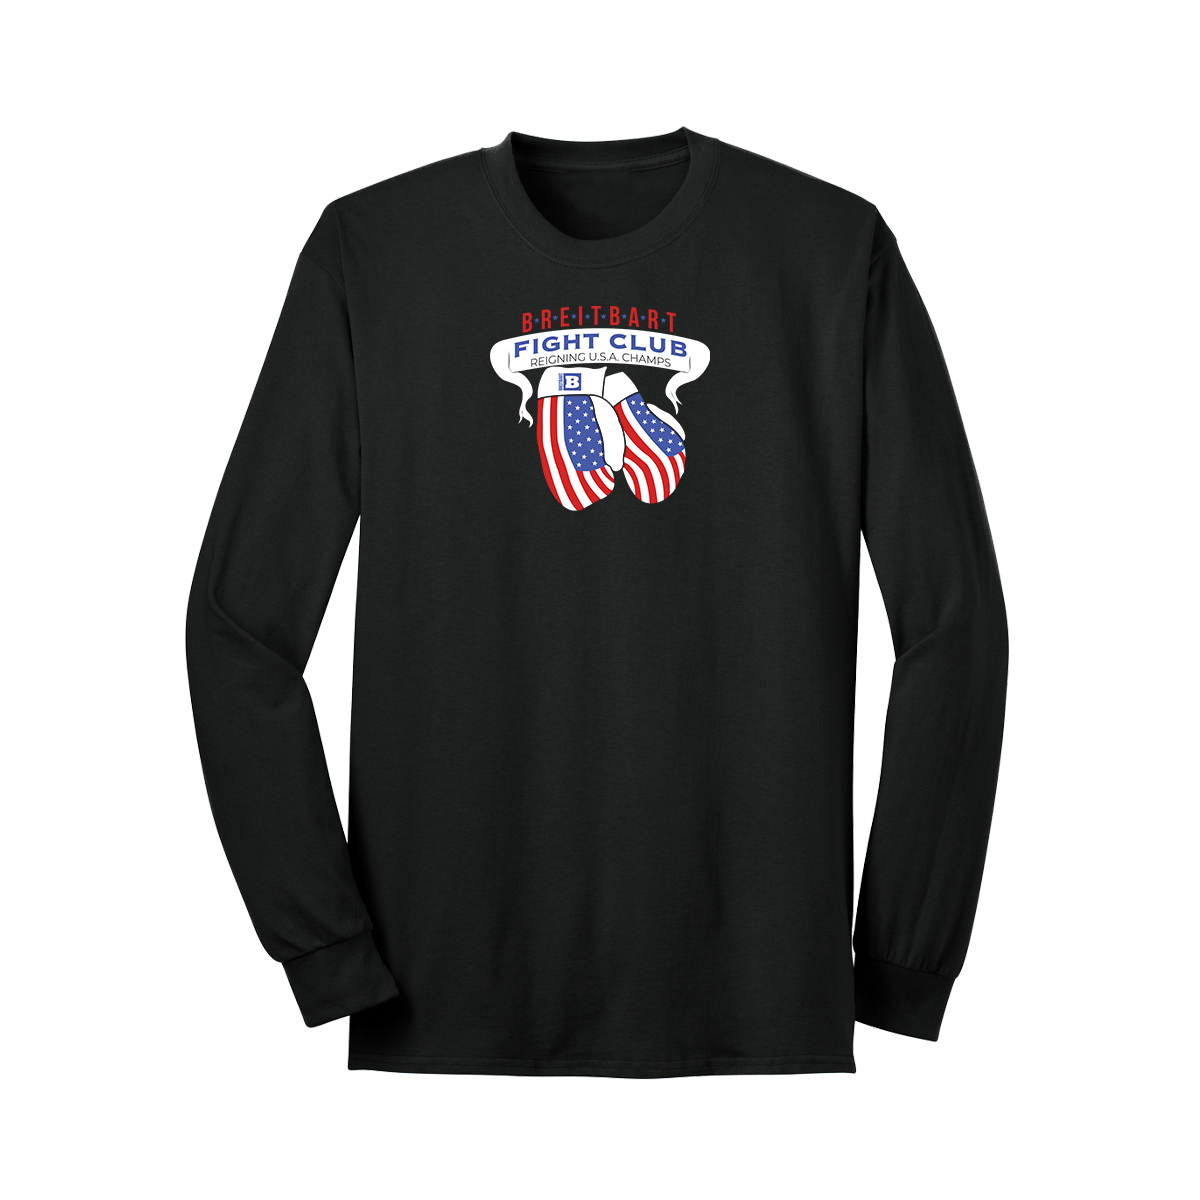 Breitbart Fight Club USA Champs Long Sleeve T-shirt - Black